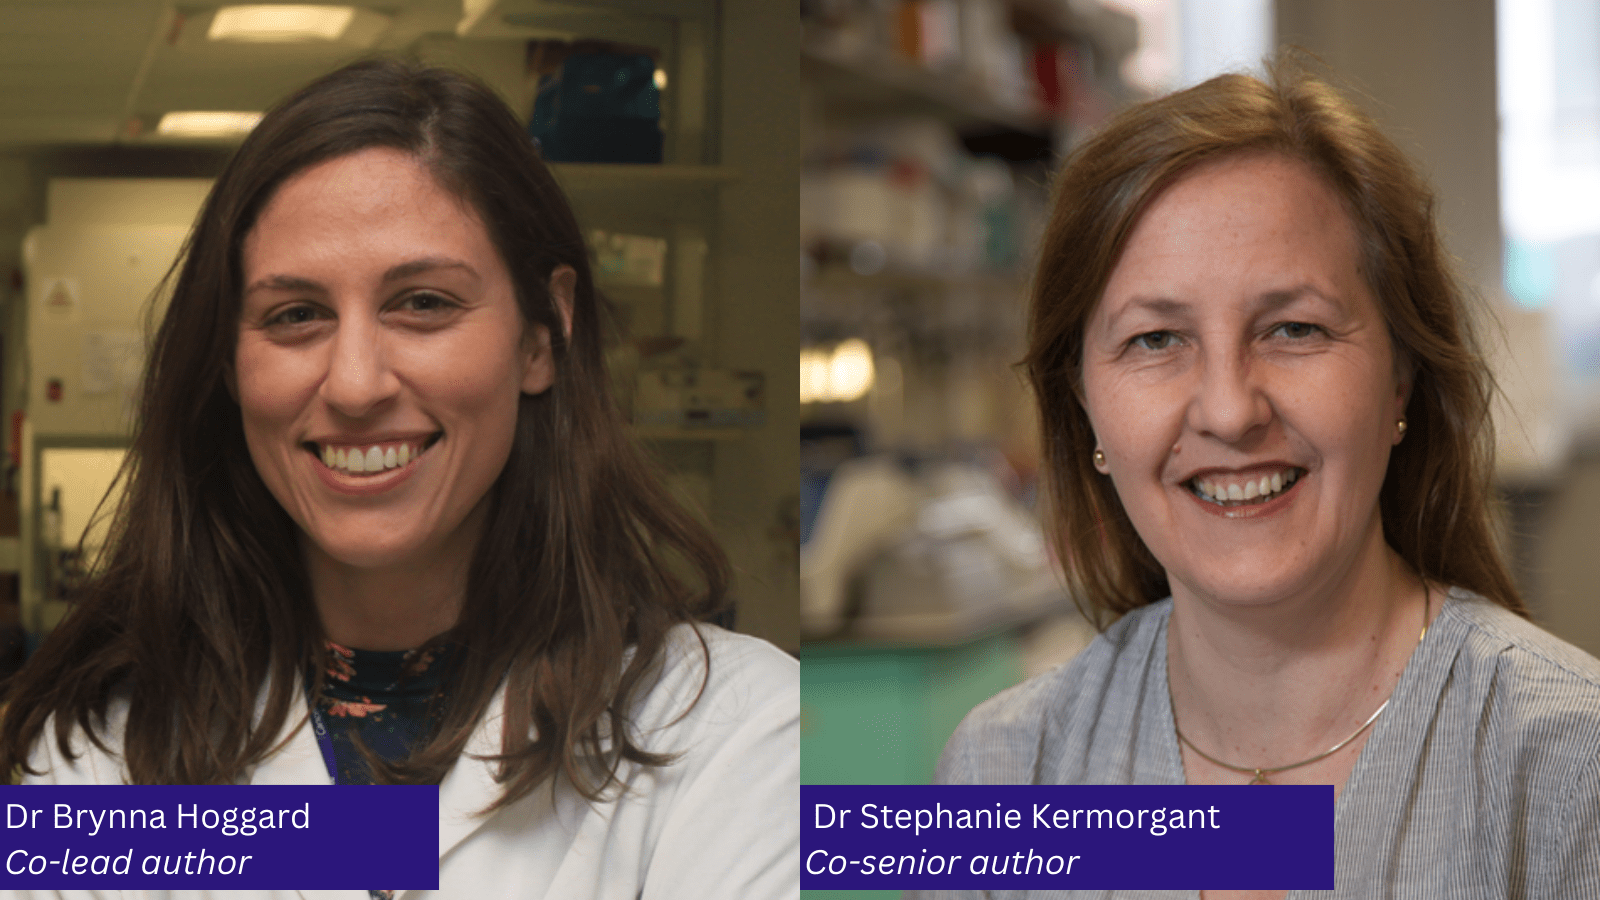 Dr Brynna Hoggard, co-lead author of the new study, and Dr Stephanie Kermorgant, co-senior author